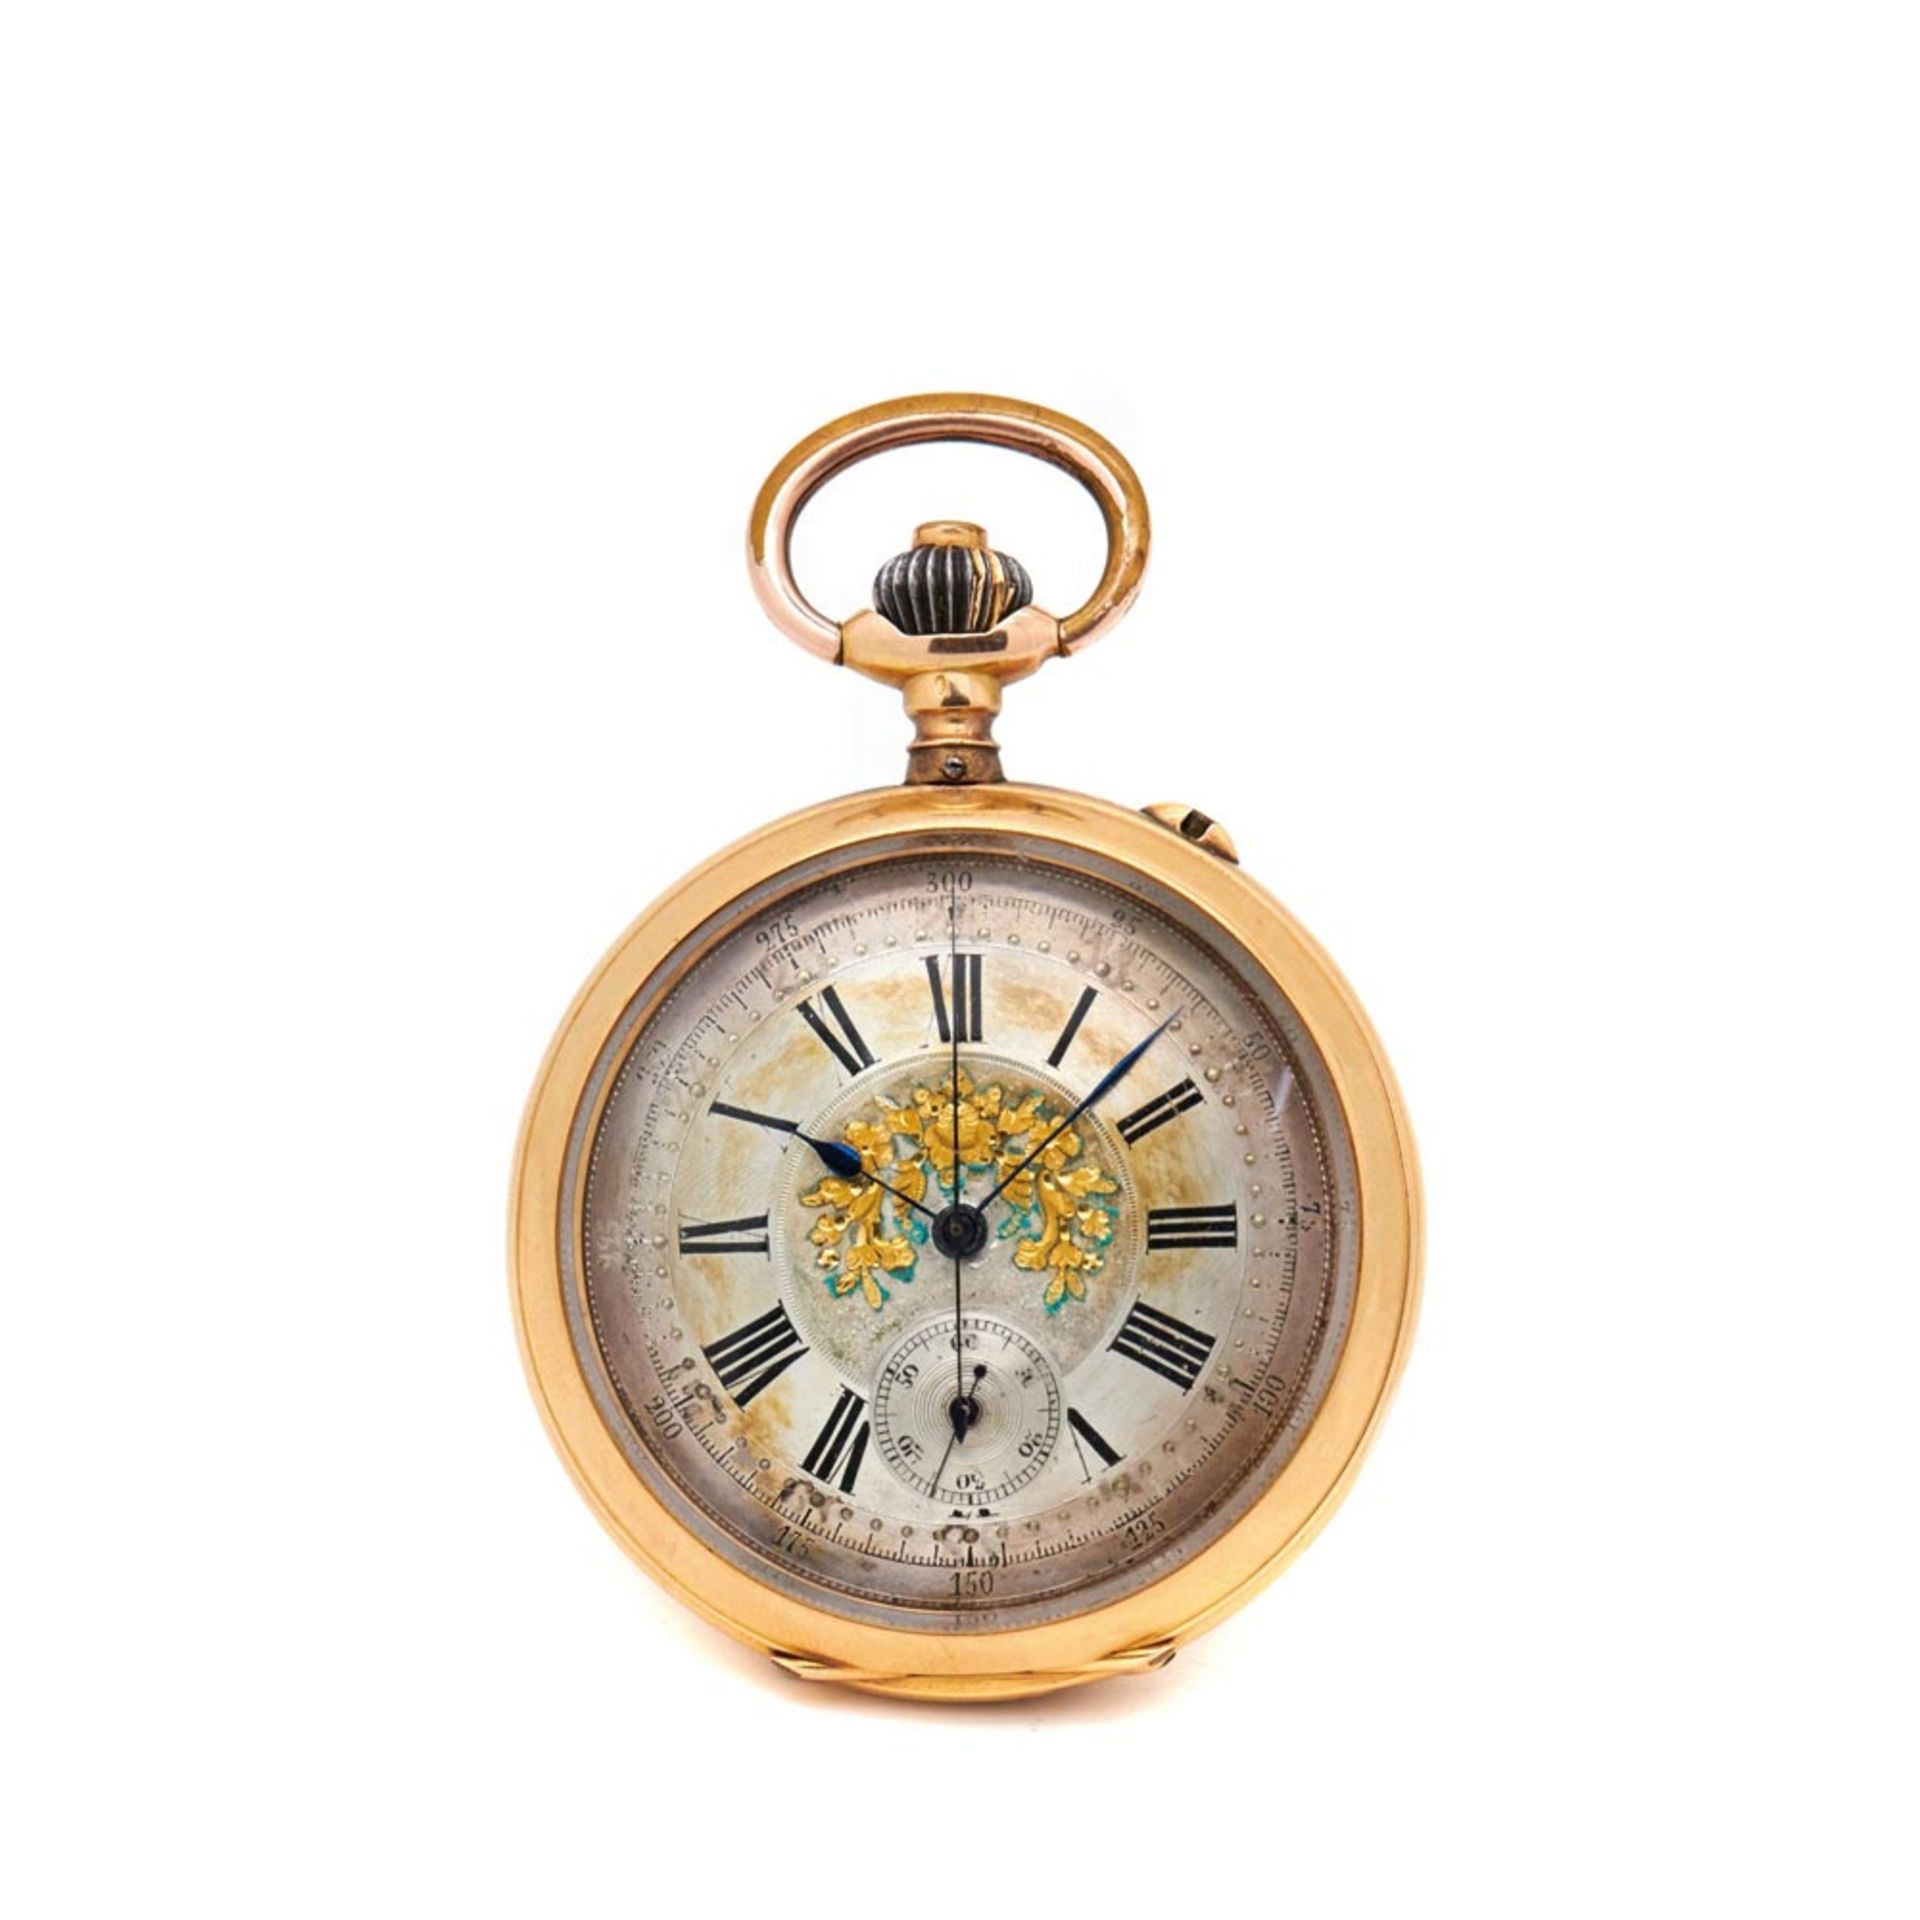 Reloj de bolsillo lepine Herbert, tercer cuarto del s.XIX. En oro. Esfera argenté con aplicaciones